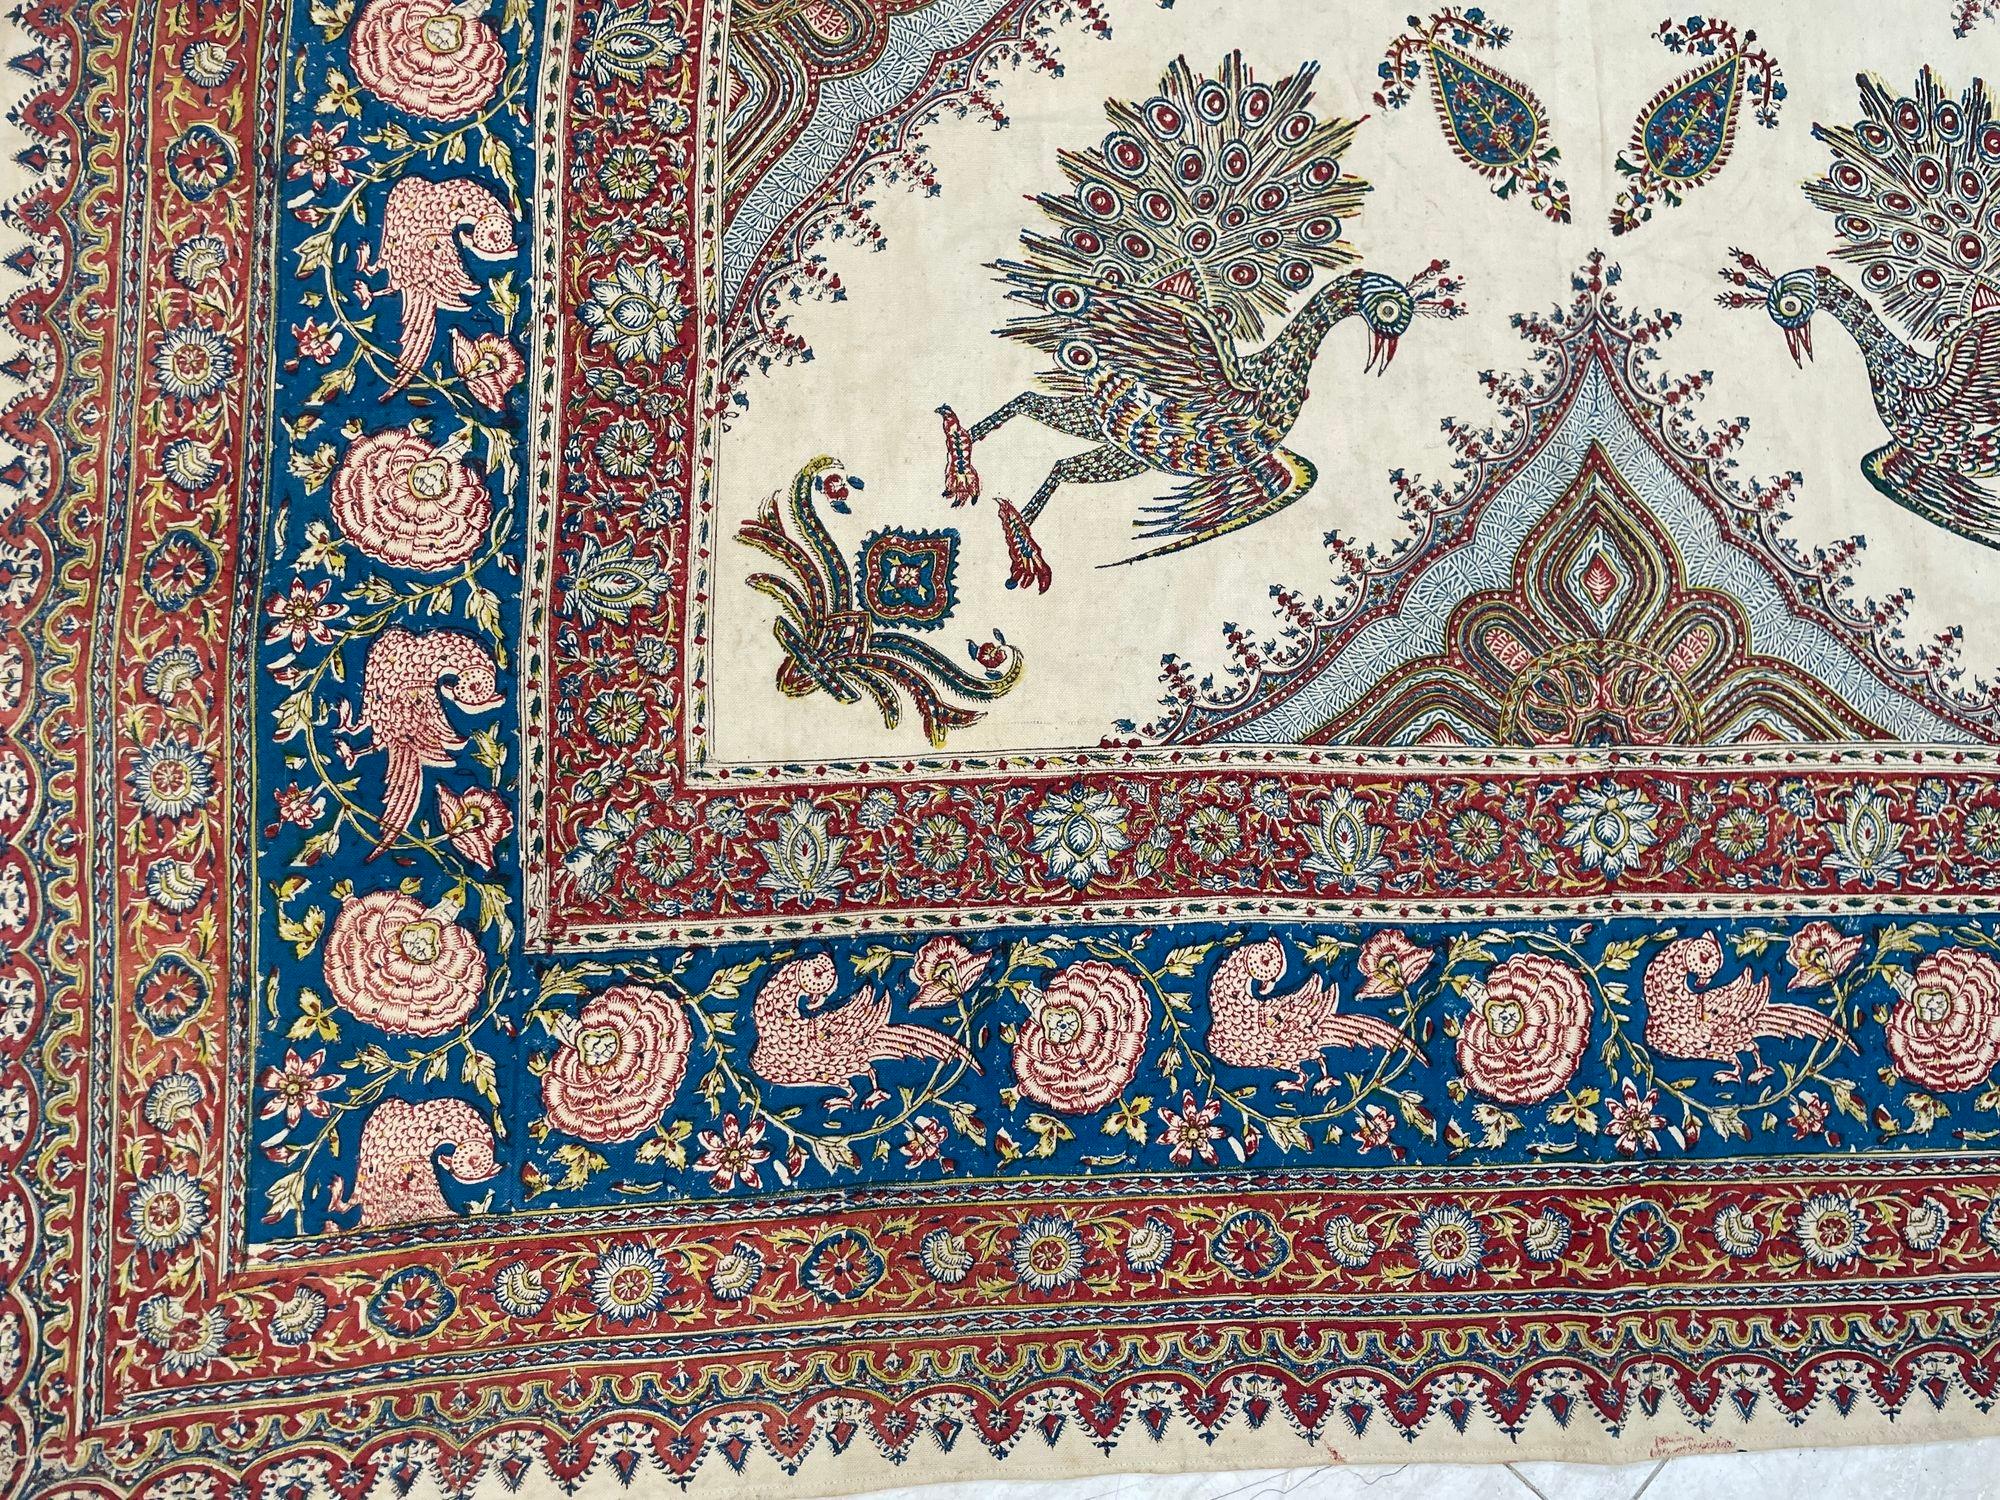 Cotton Large Isfahan Ghalamkar Persian Paisley Textile Block Printed 1950s For Sale